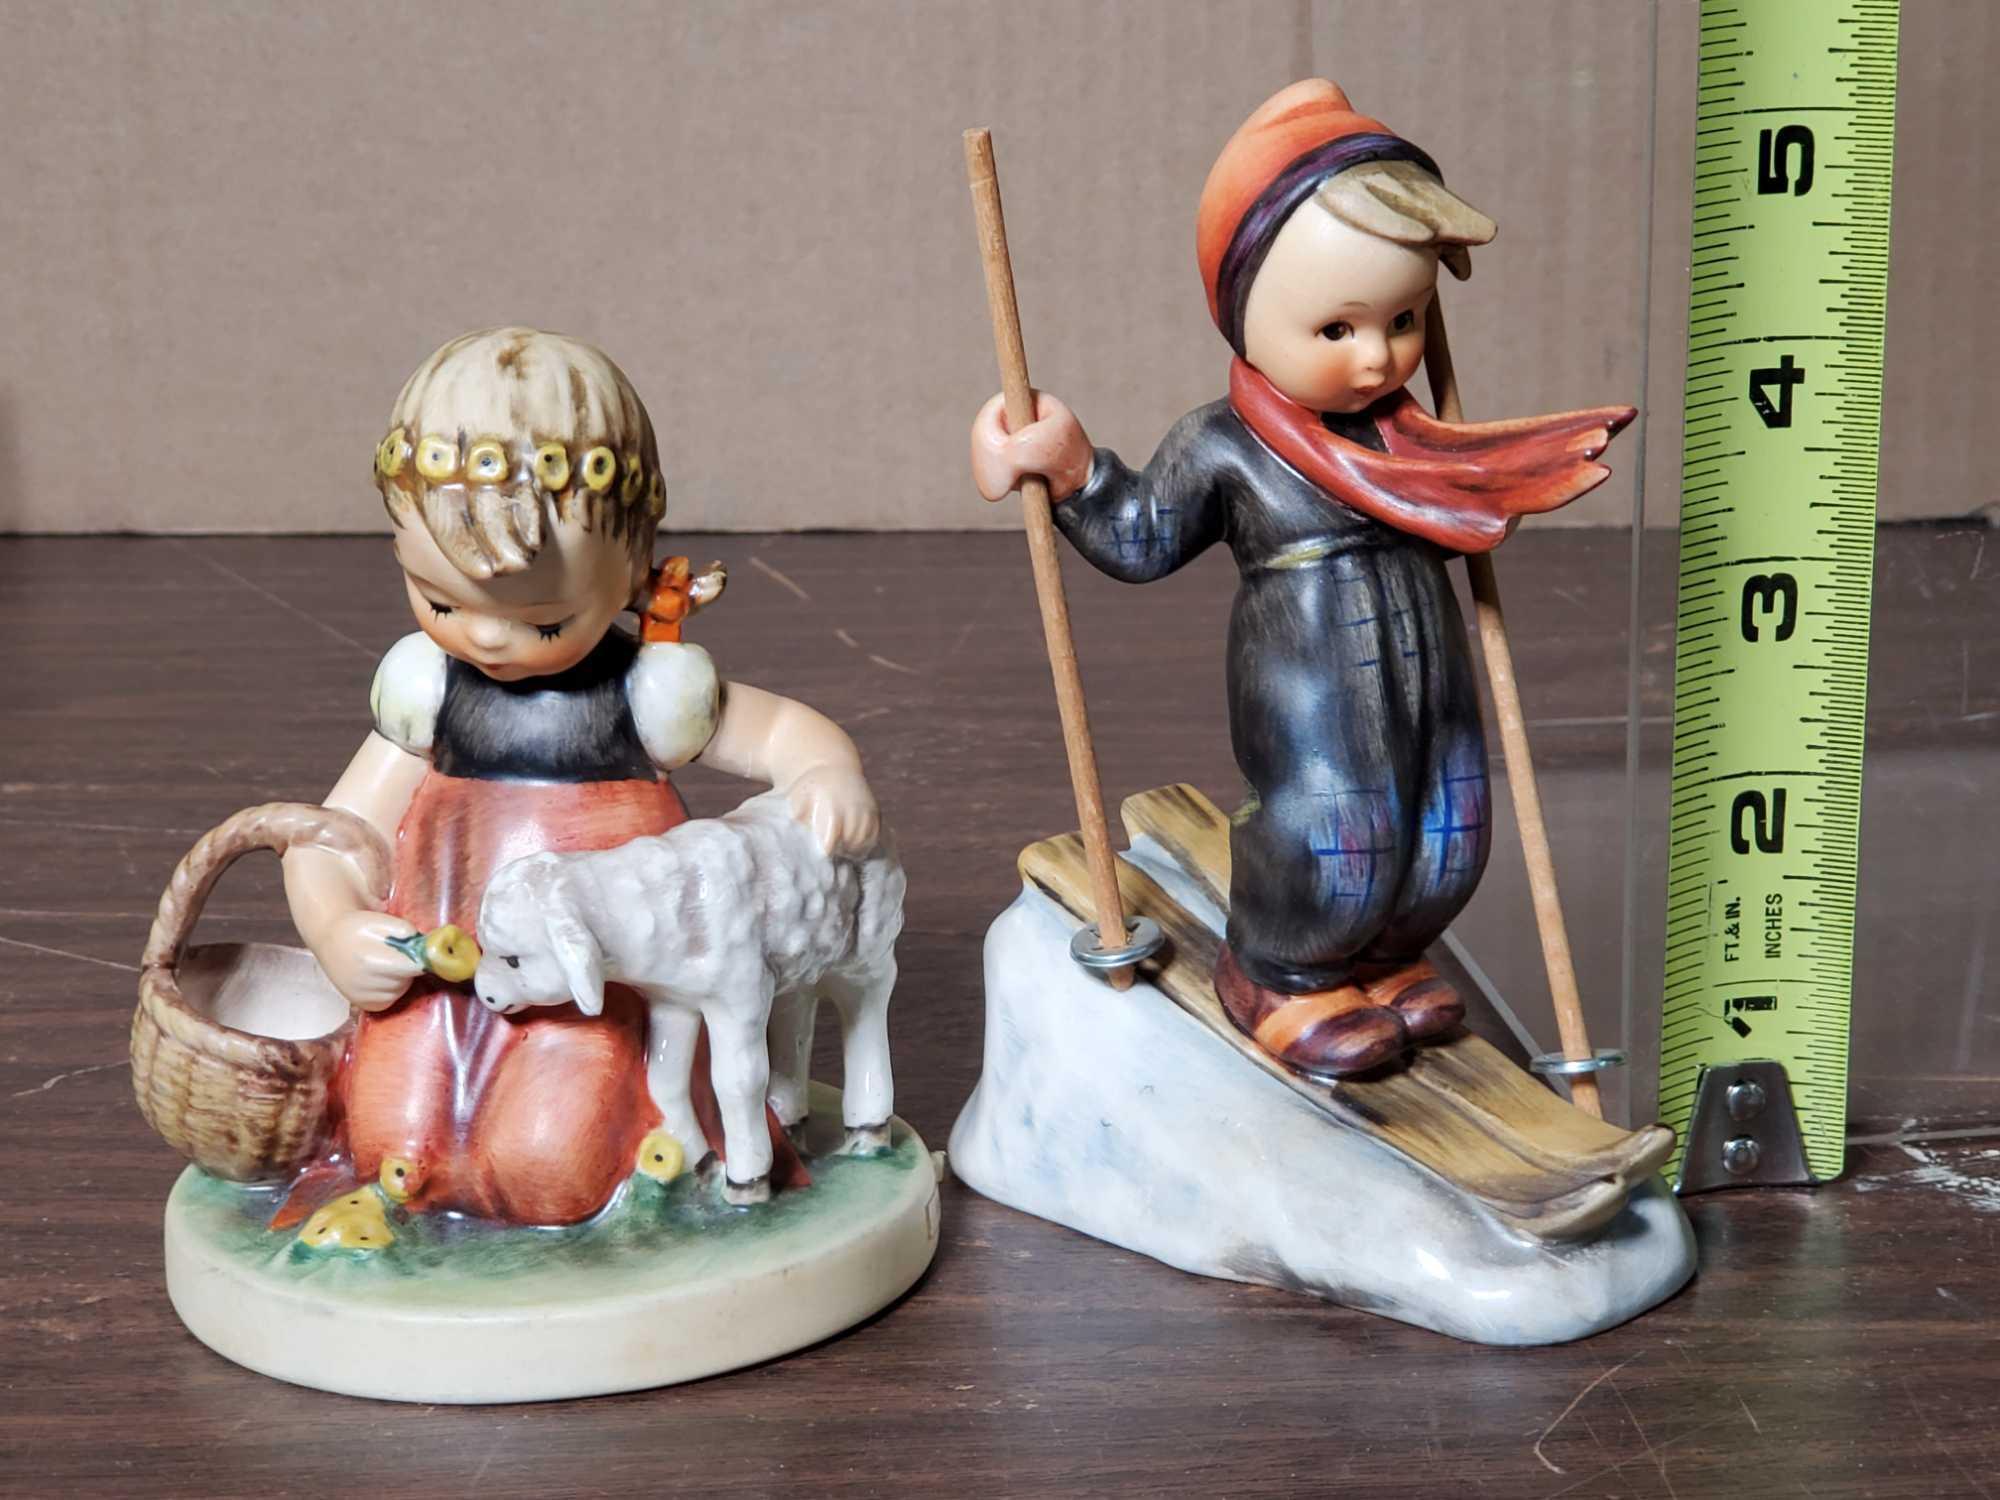 12 Porcelain and Ceramic Figurines